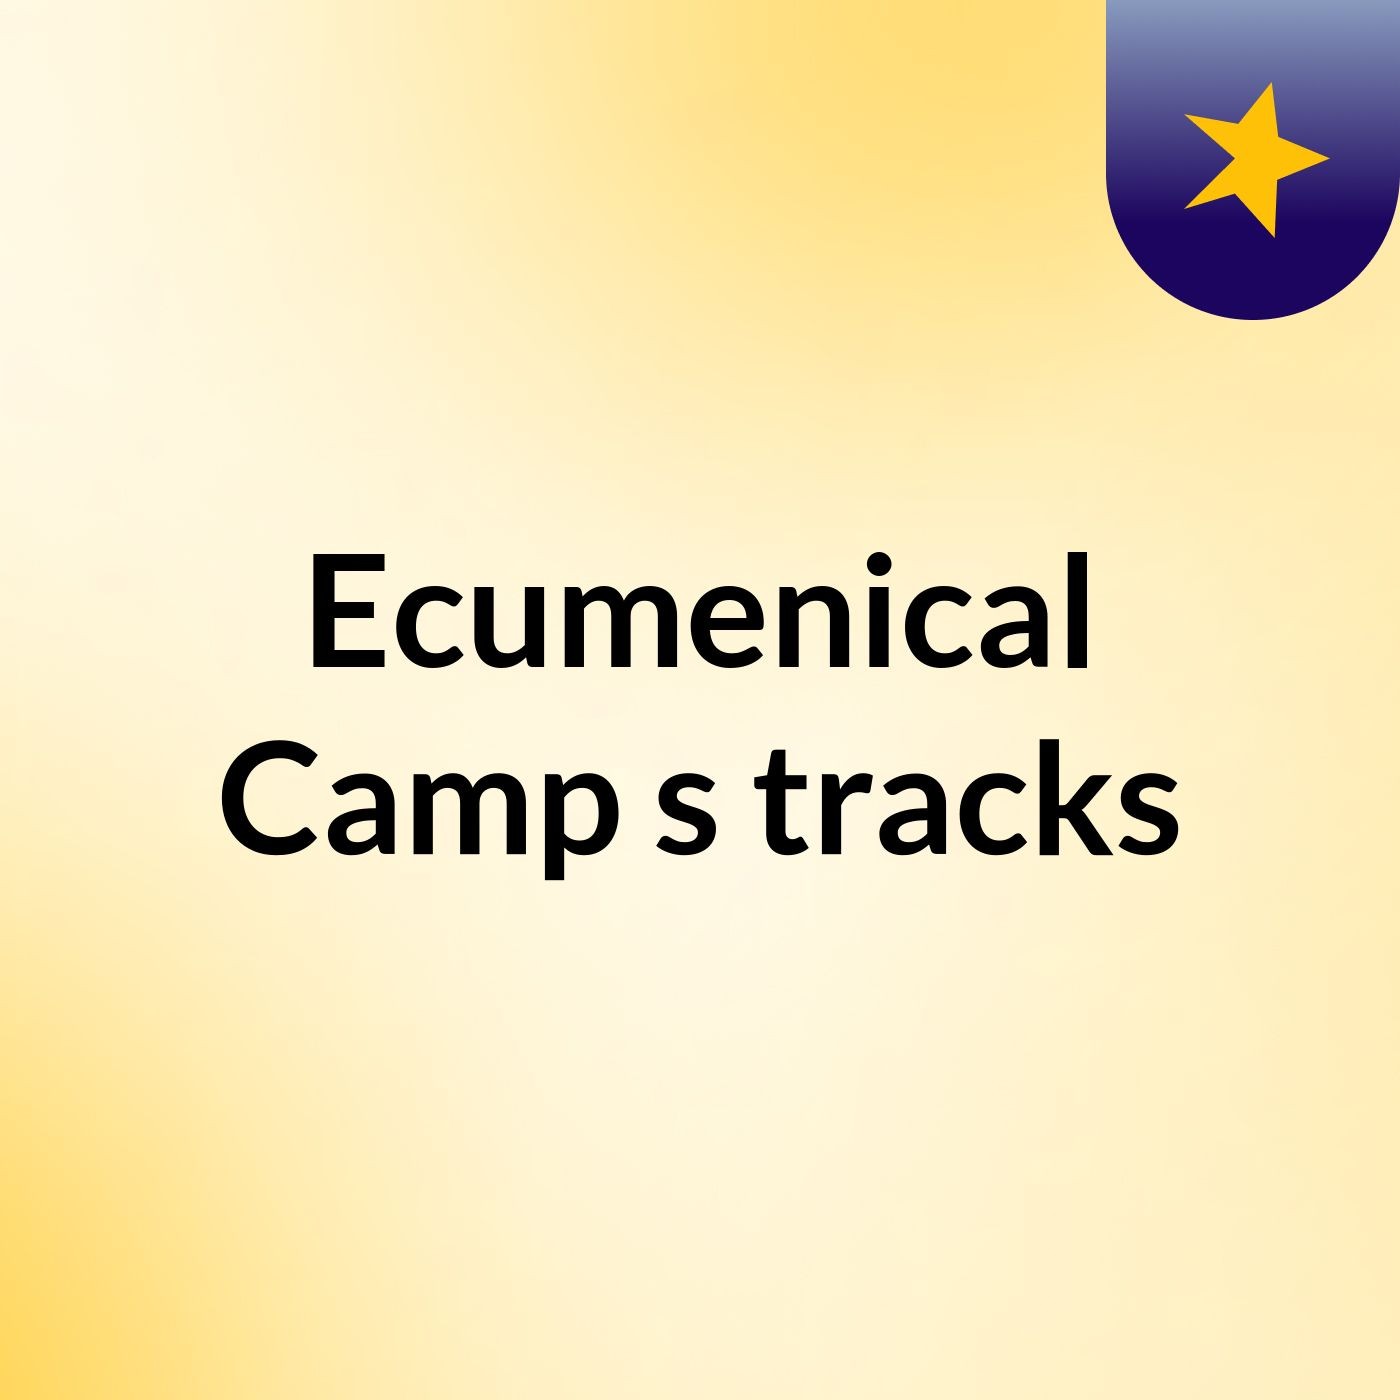 Ecumenical Camp's tracks